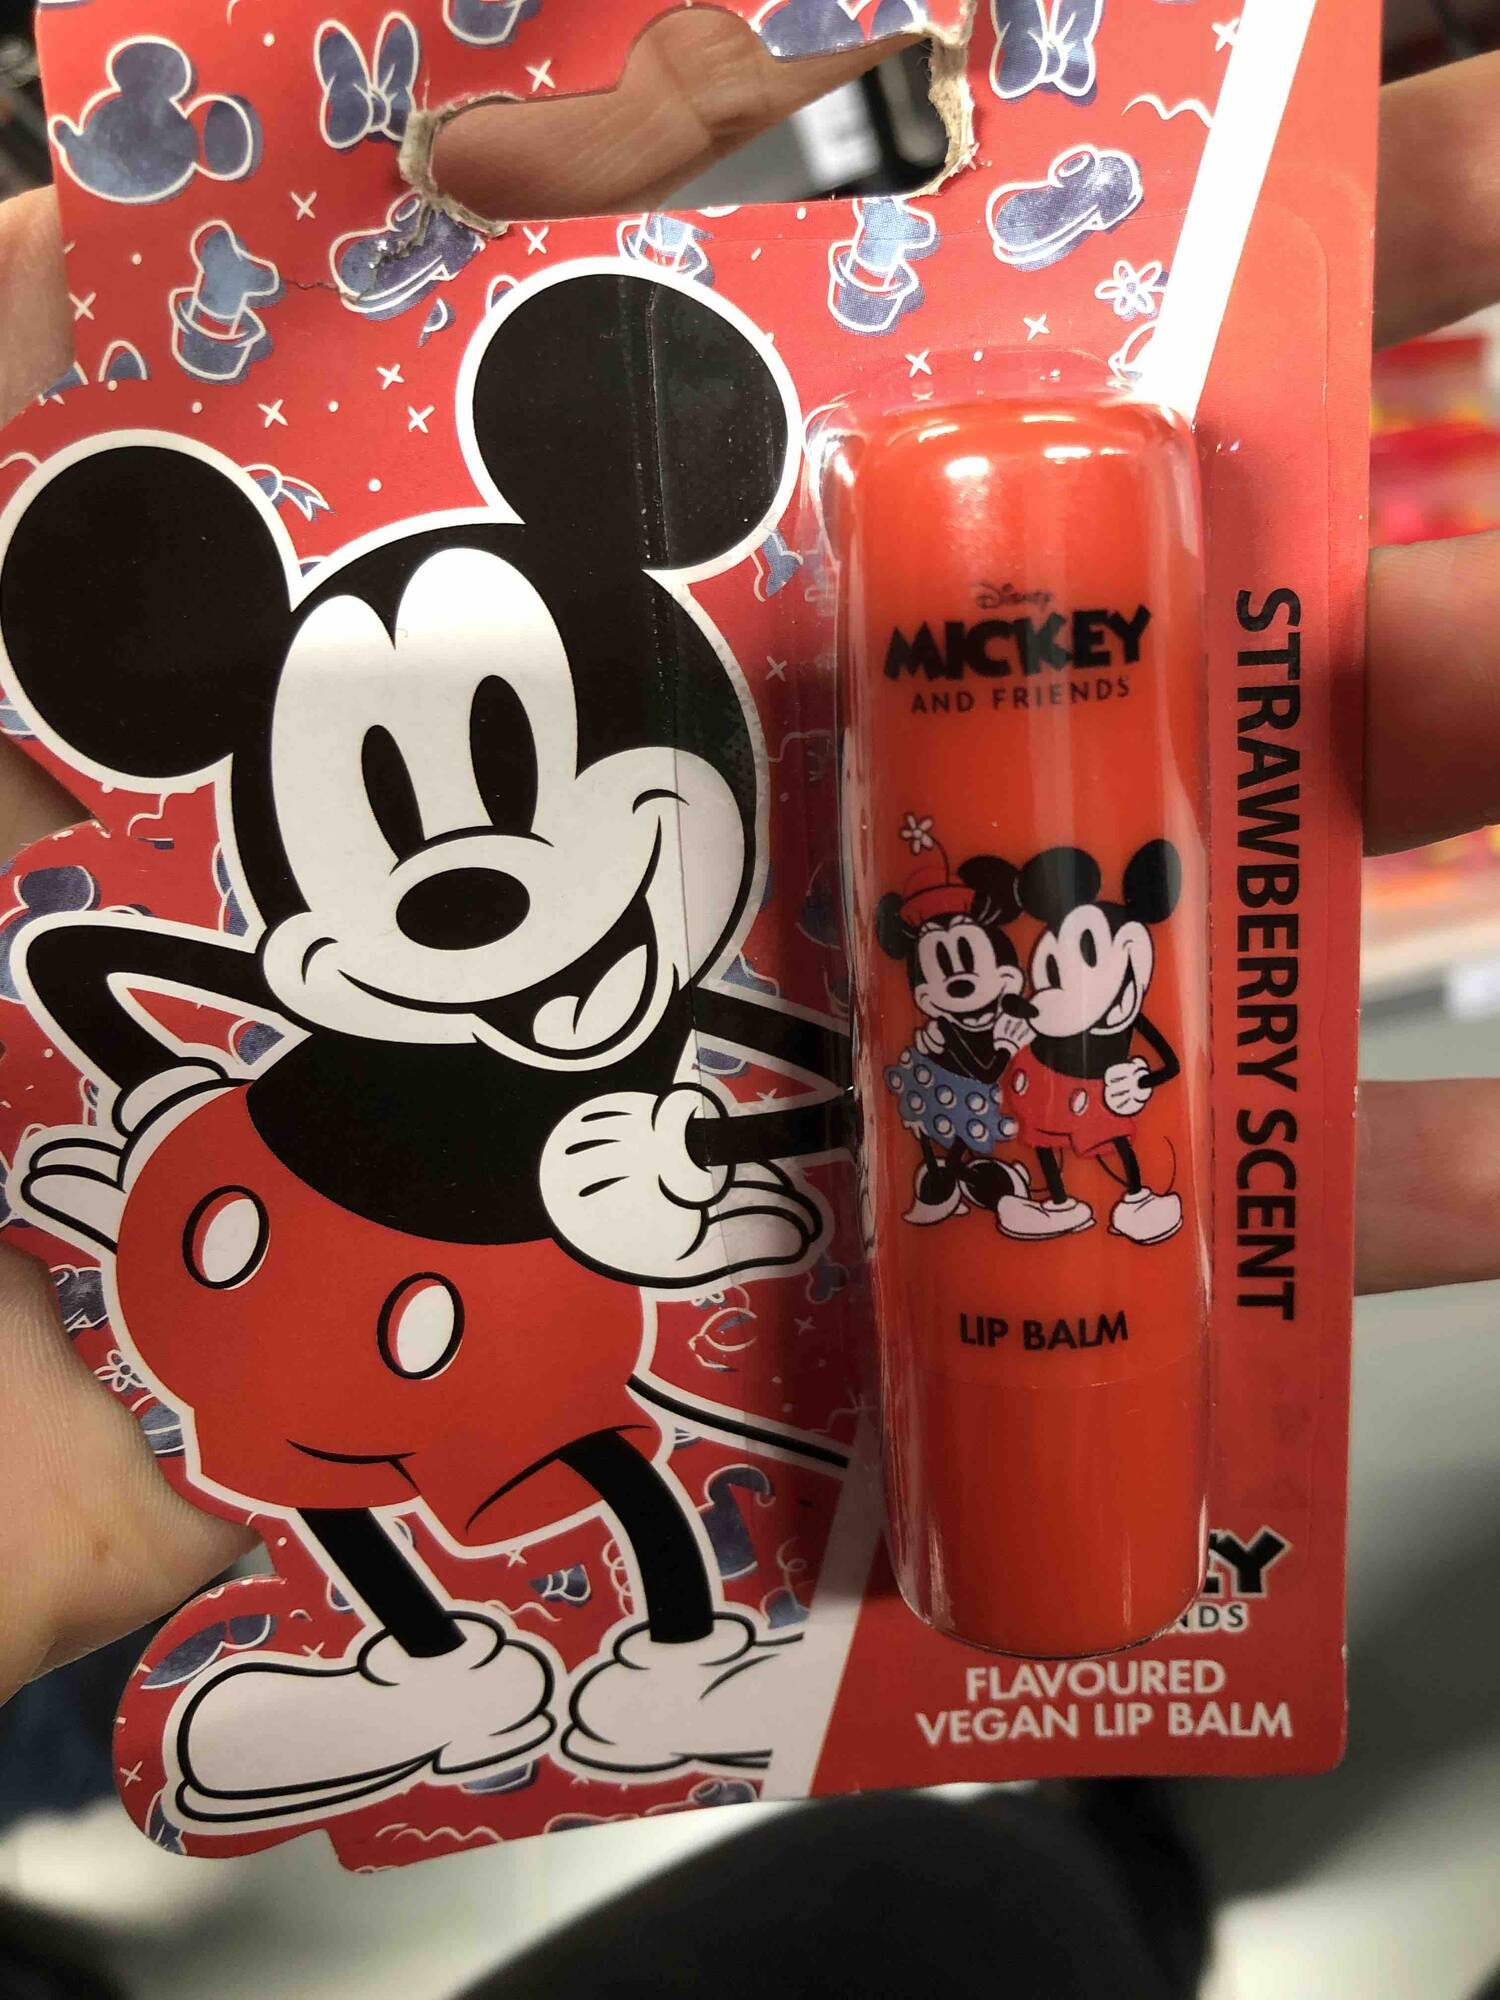 DISNEY - Mickey and friends - Lip balm strawberry scent